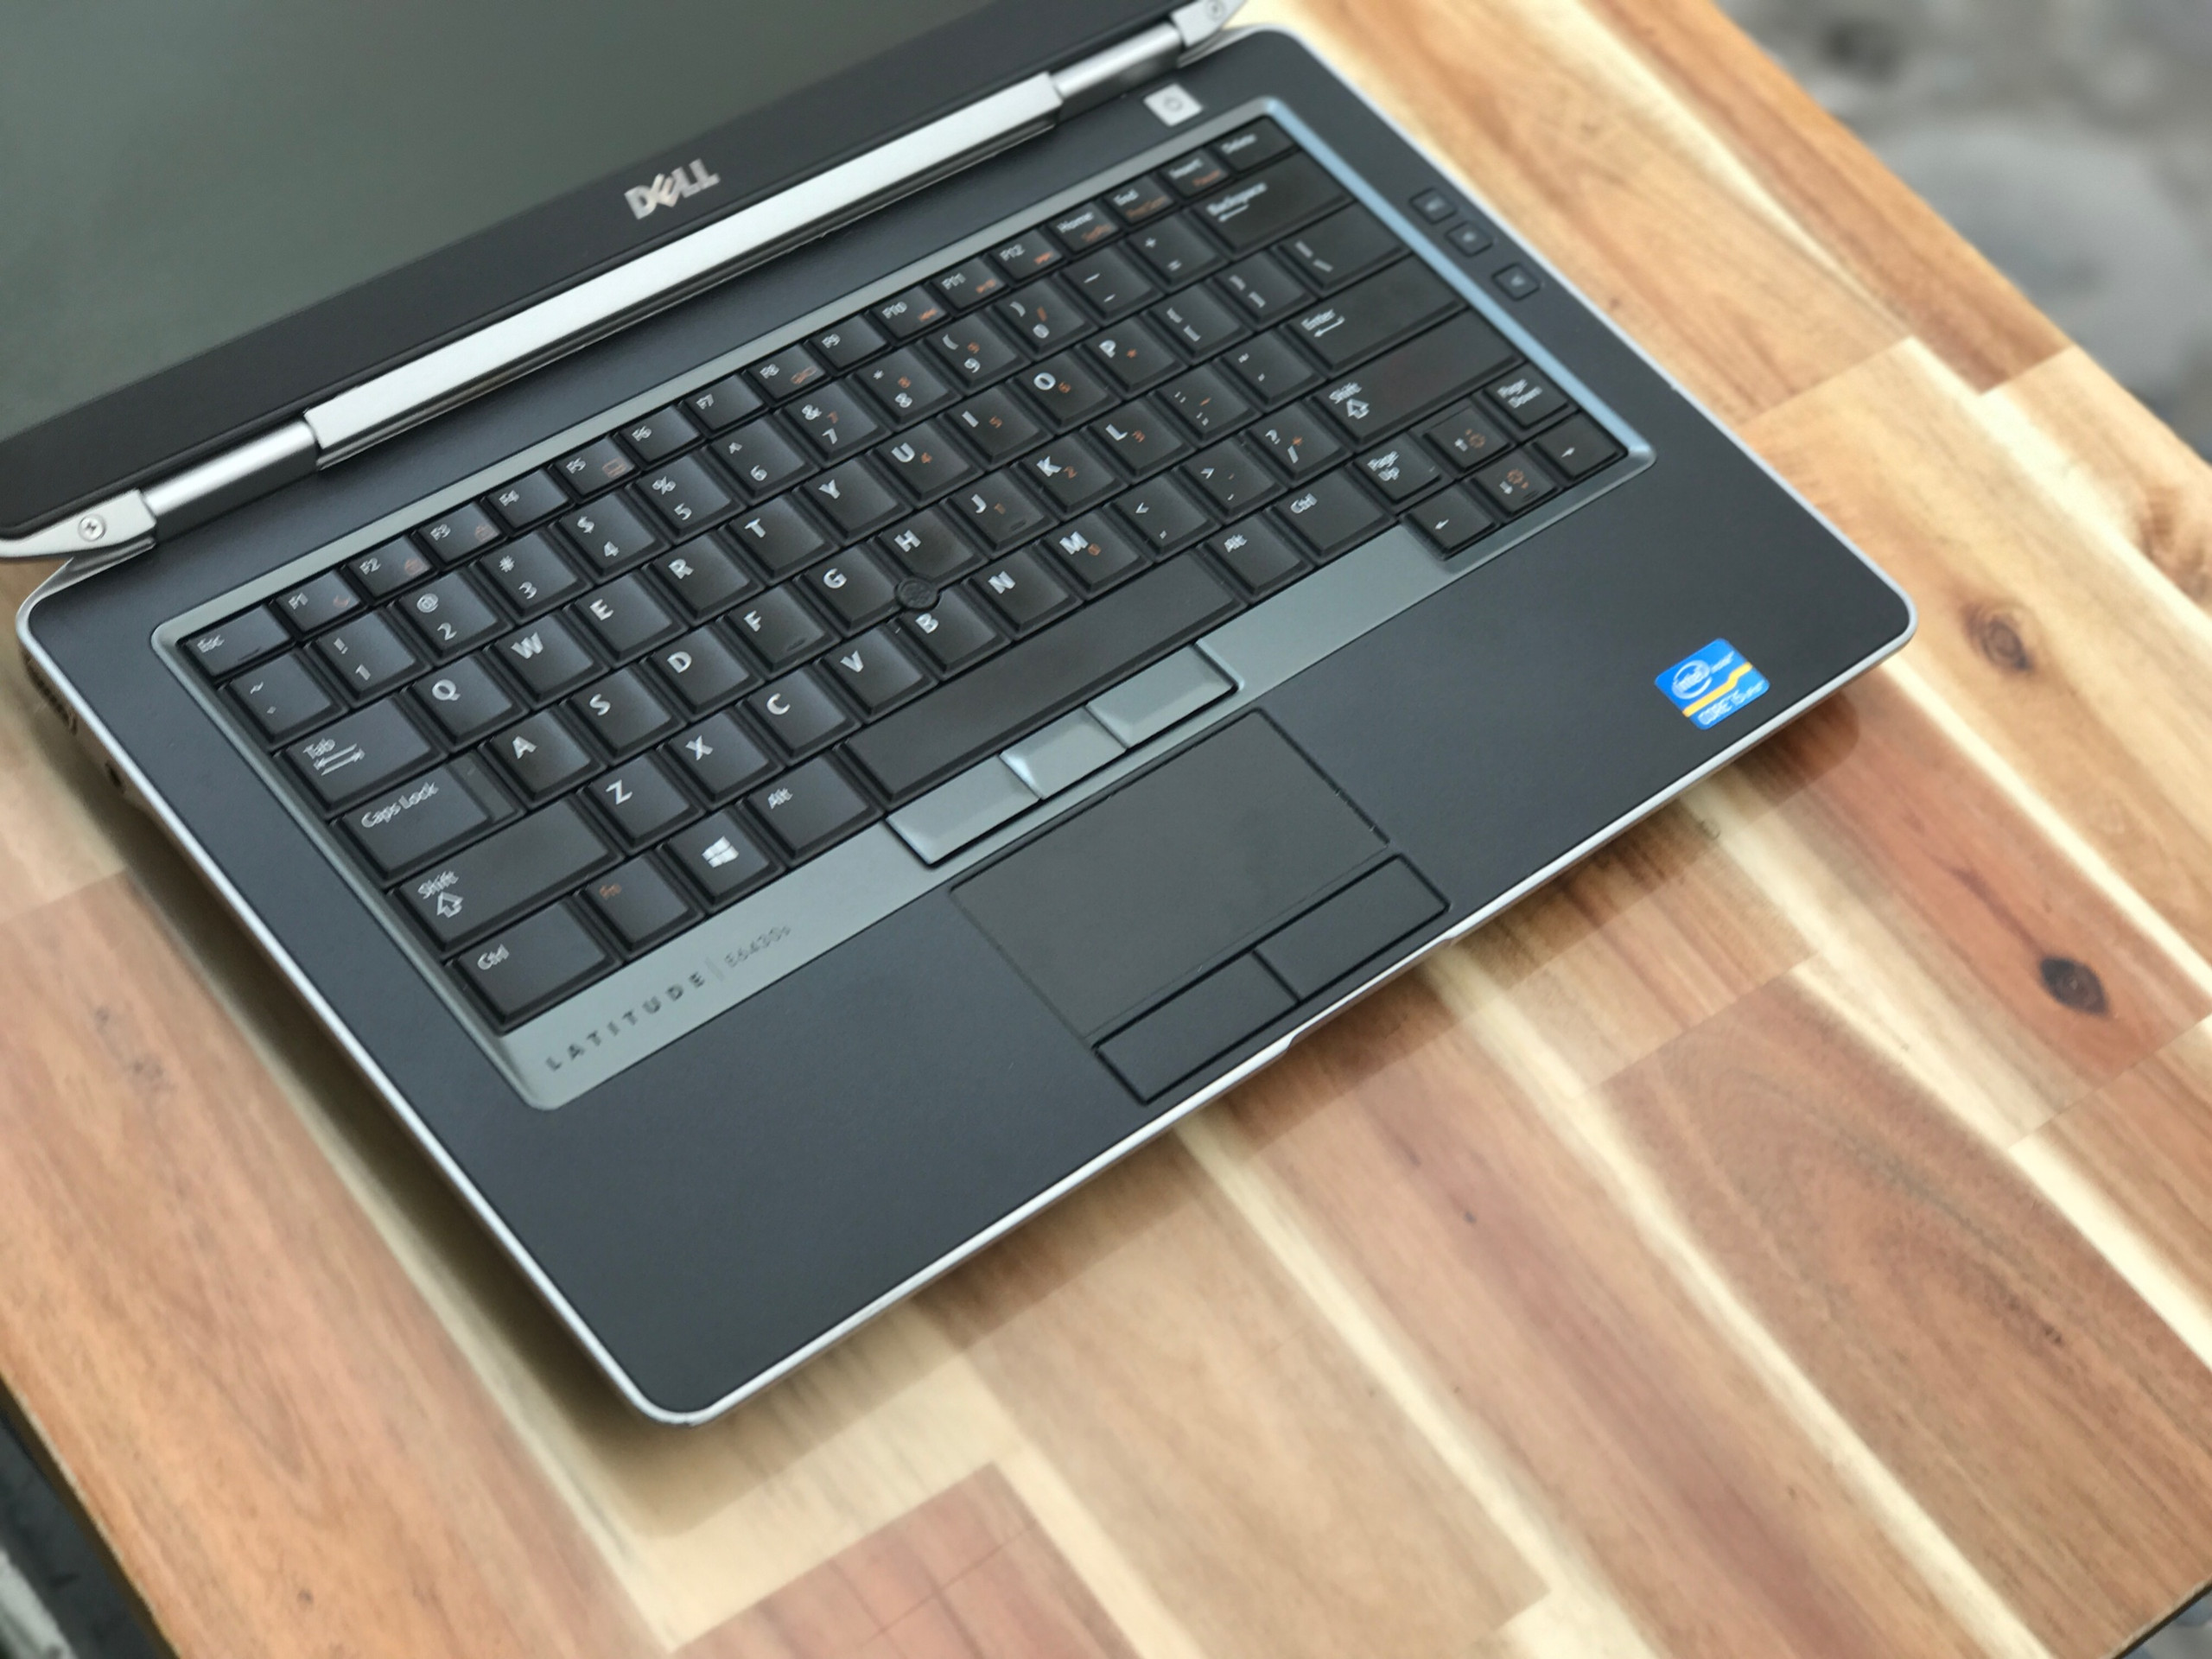 Laptop Dell Latitude E6420, i5 2520M 4G 320G Đẹp zin 100% Giá rẻ3